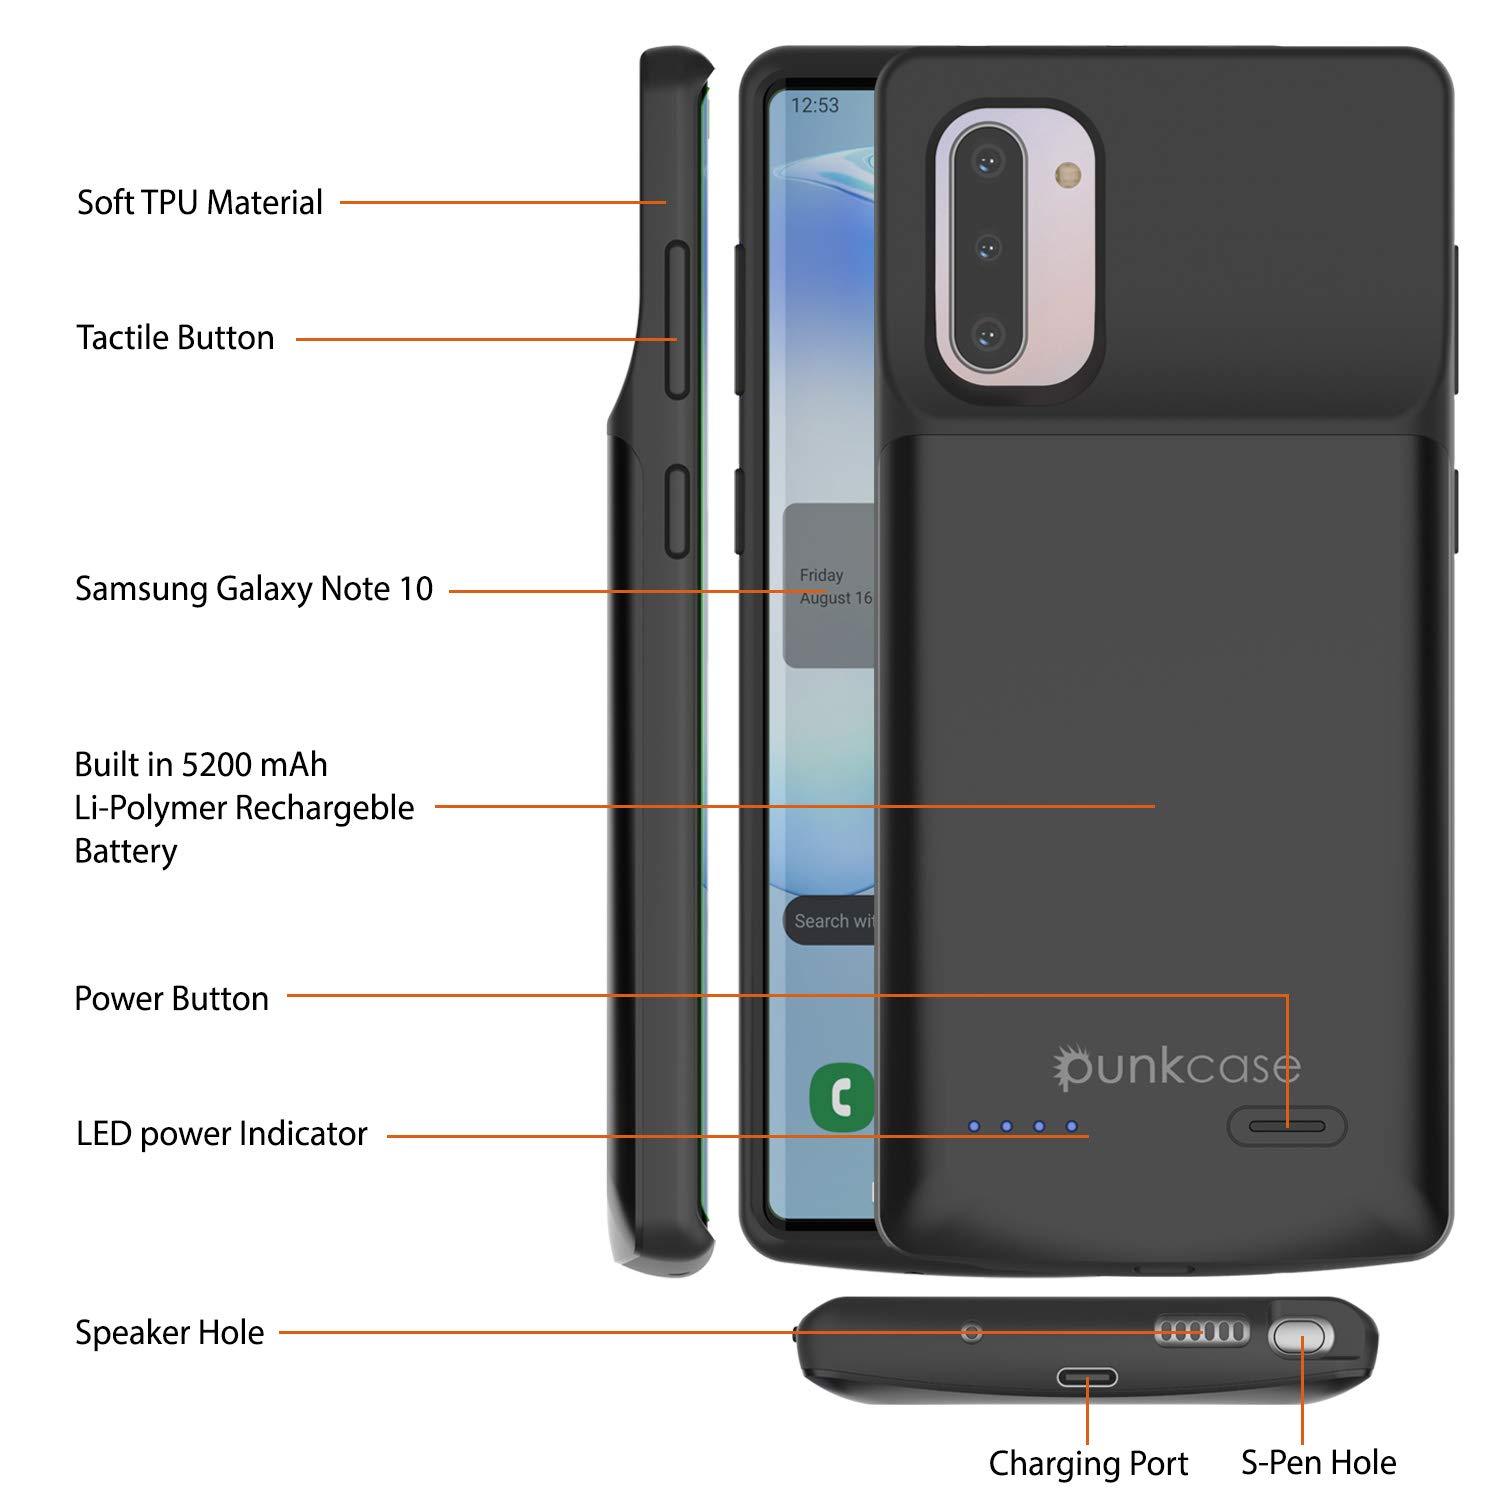 Galaxy Note 10 5200mAH Battery Charger W/ USB Port Slim Case [Black]